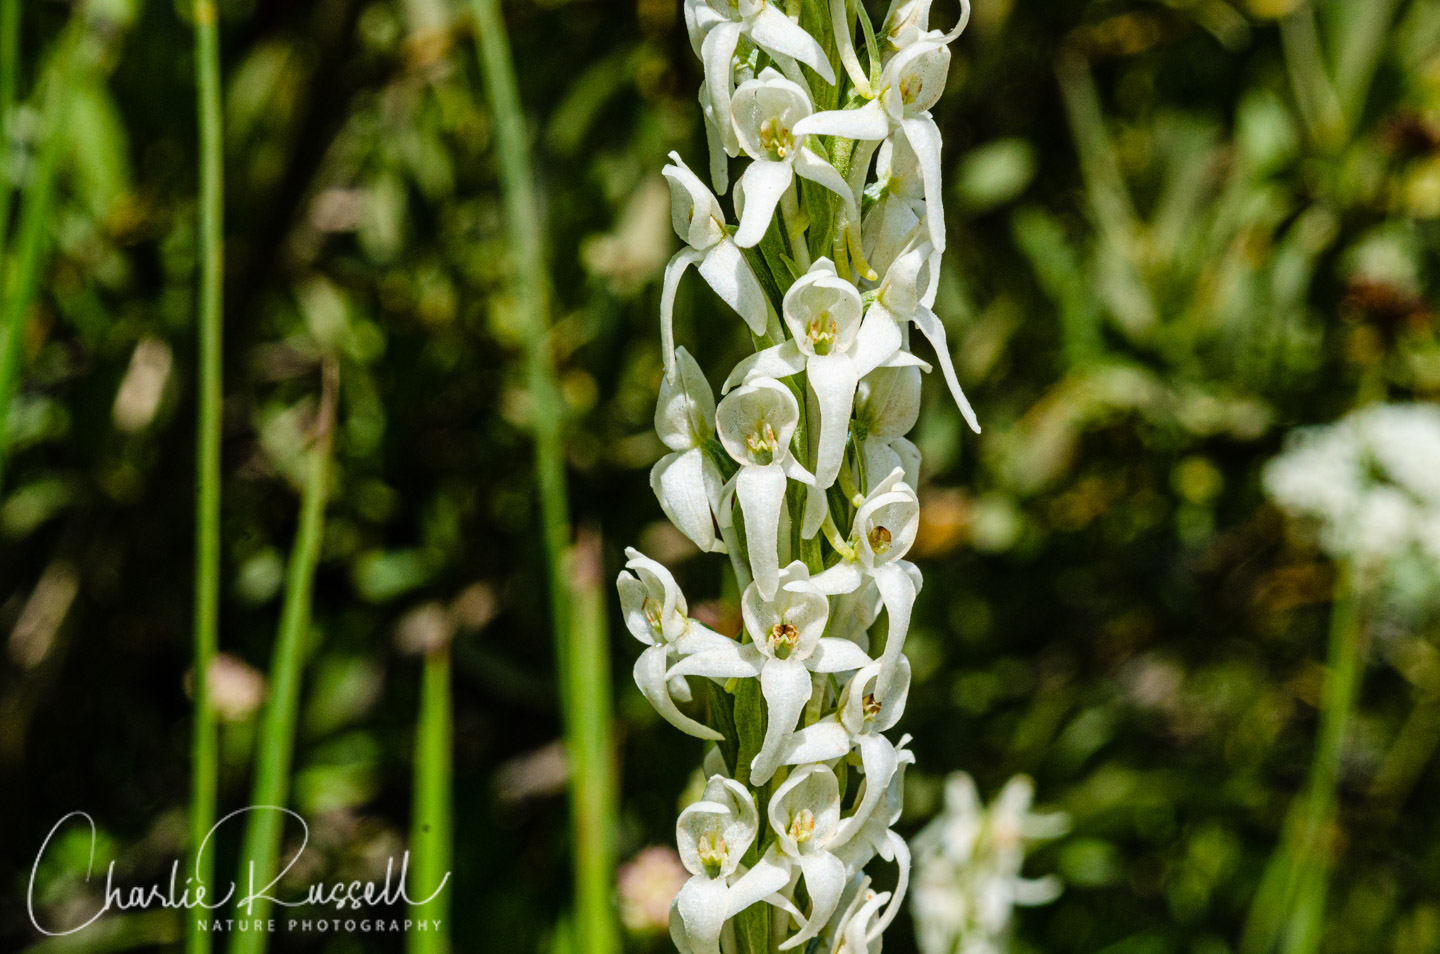 Sierra bog orchid, Platanthera dilatata var. leucostachys